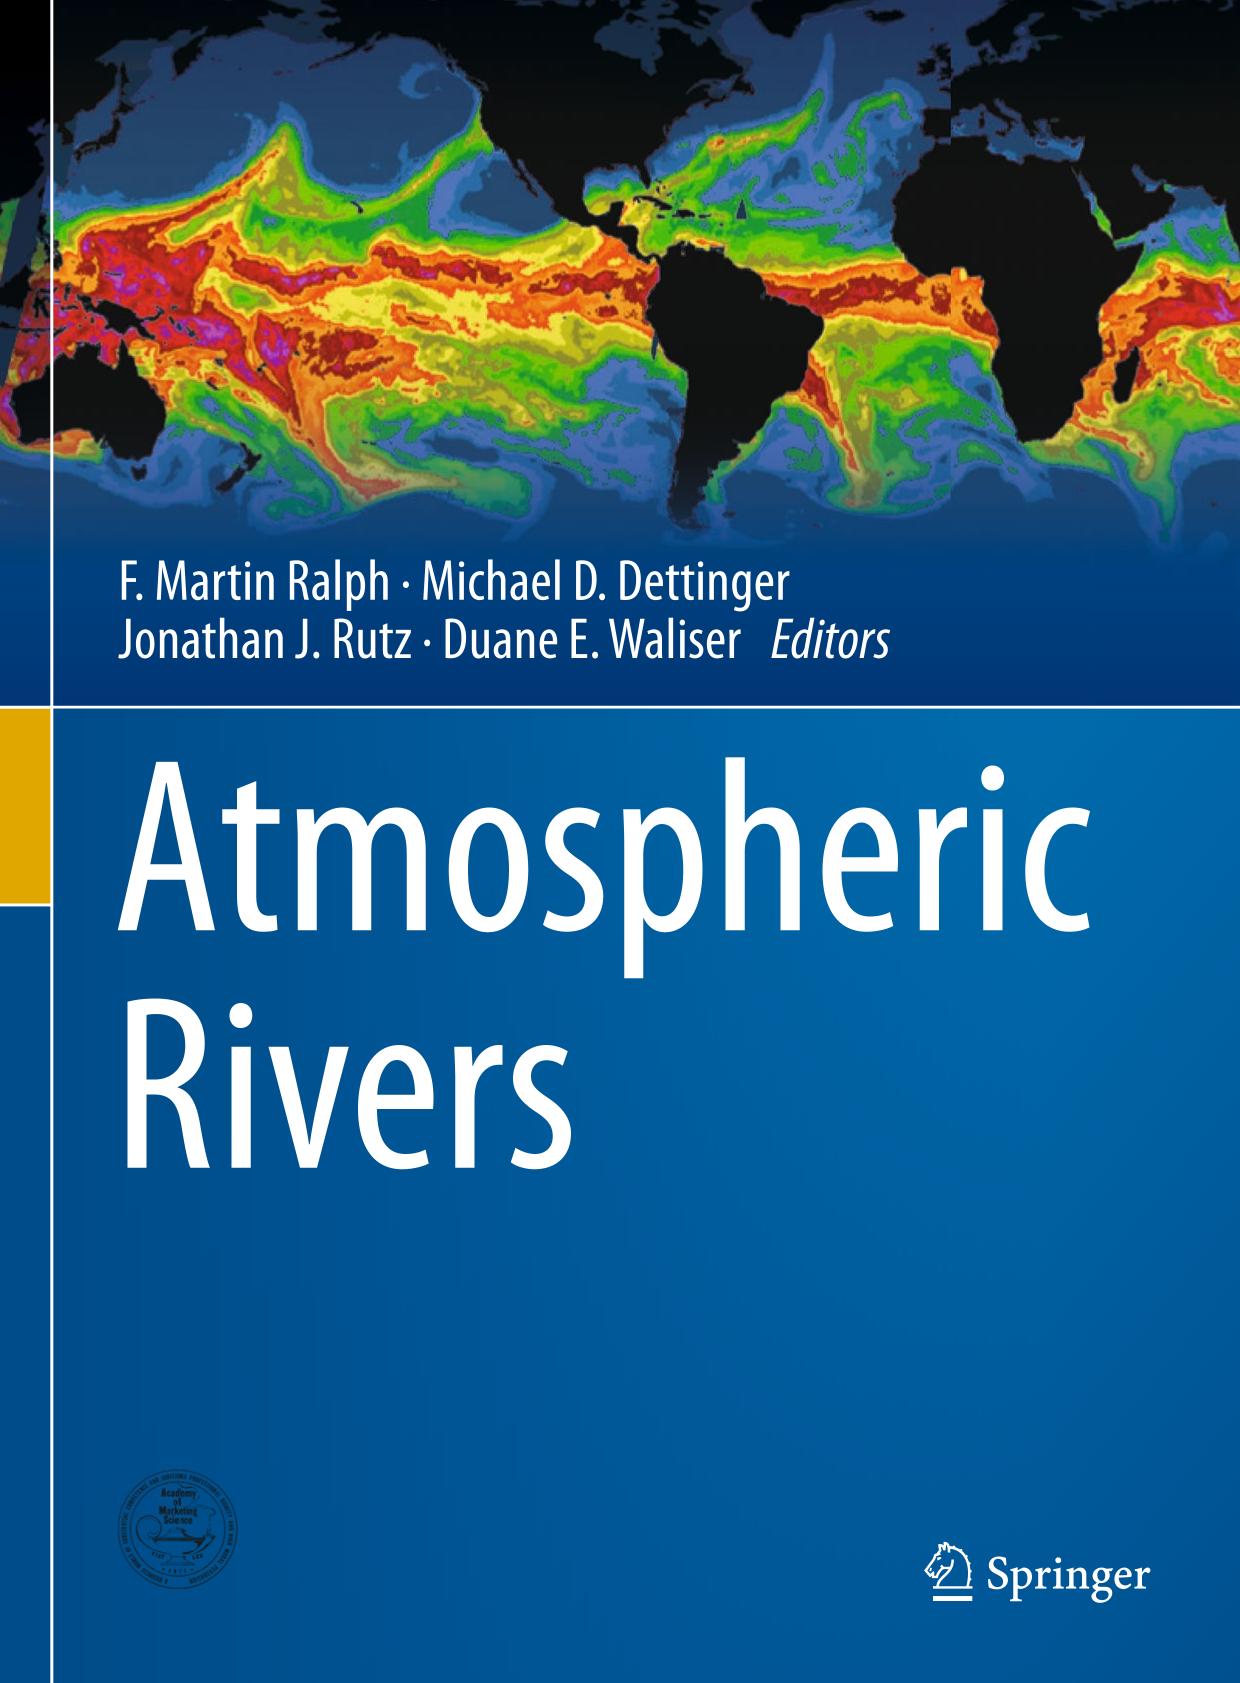 Atmospheric rivers